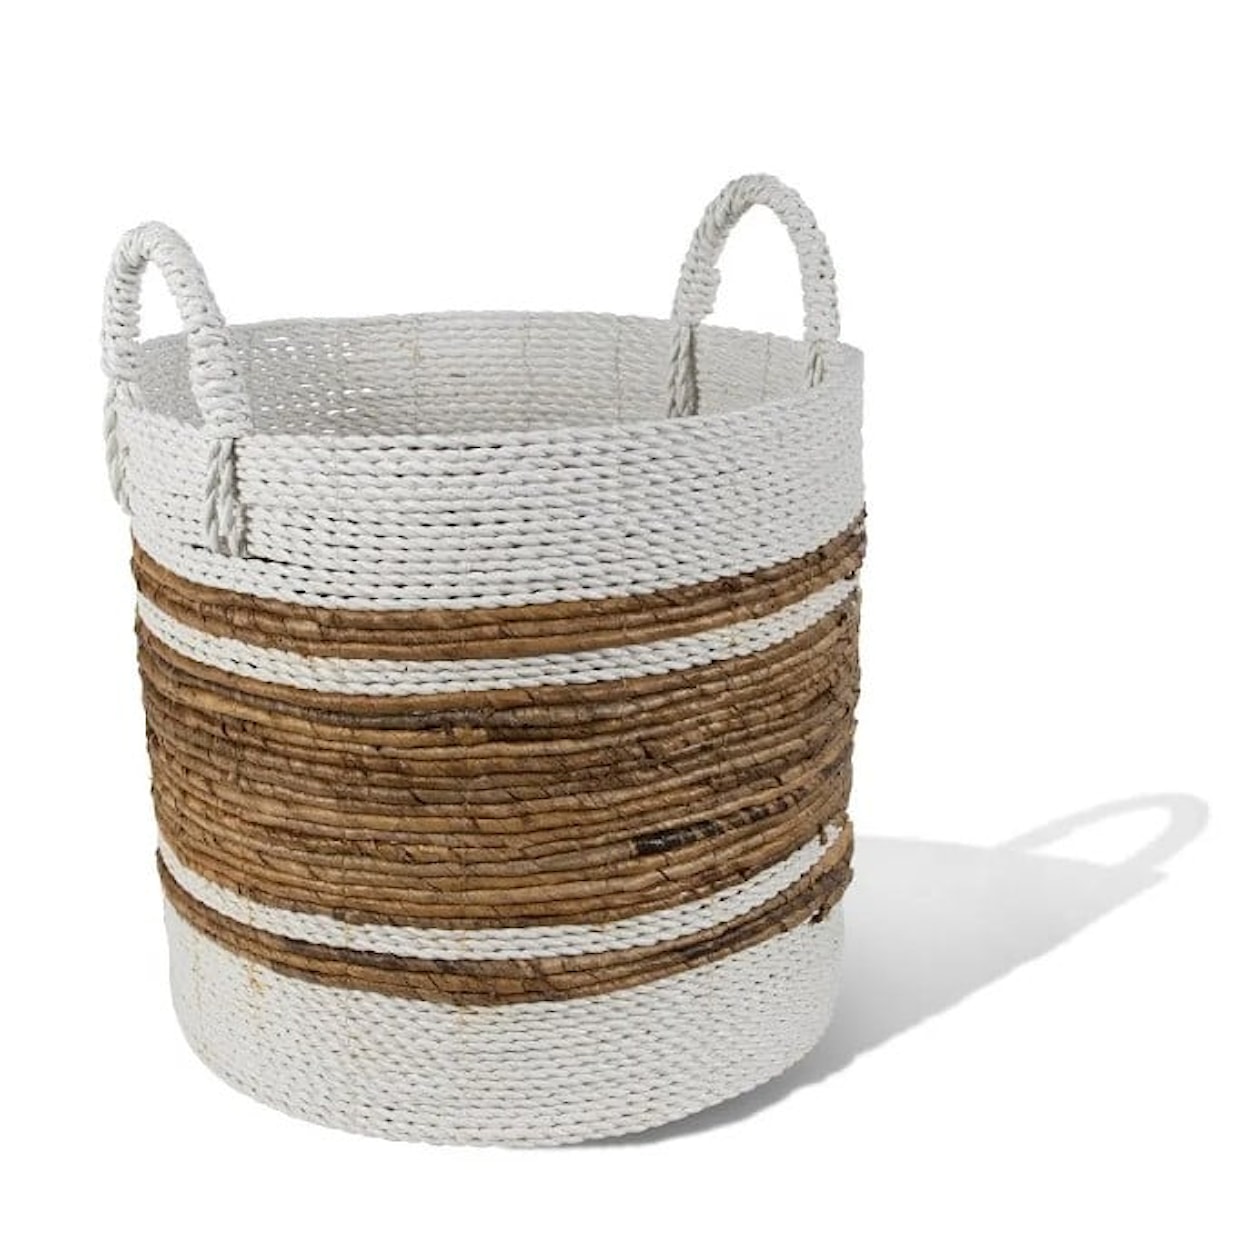 Ibolili Baskets and Sets BANANA LEAF BASKET W/ WHITE TRIM, RND- S/3